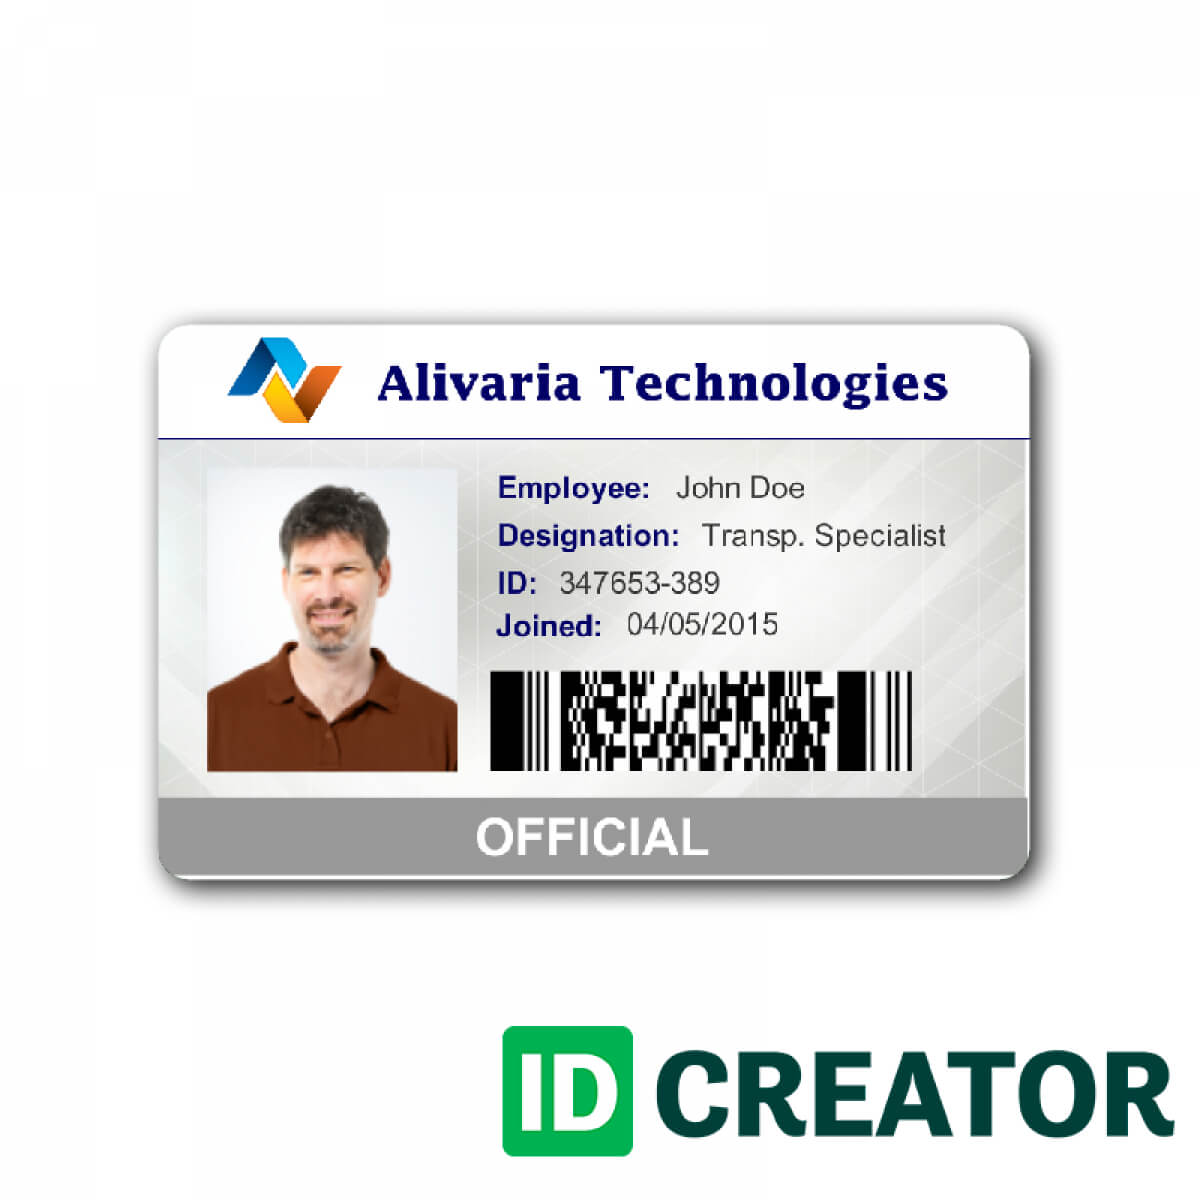 microsoft word id card template free download